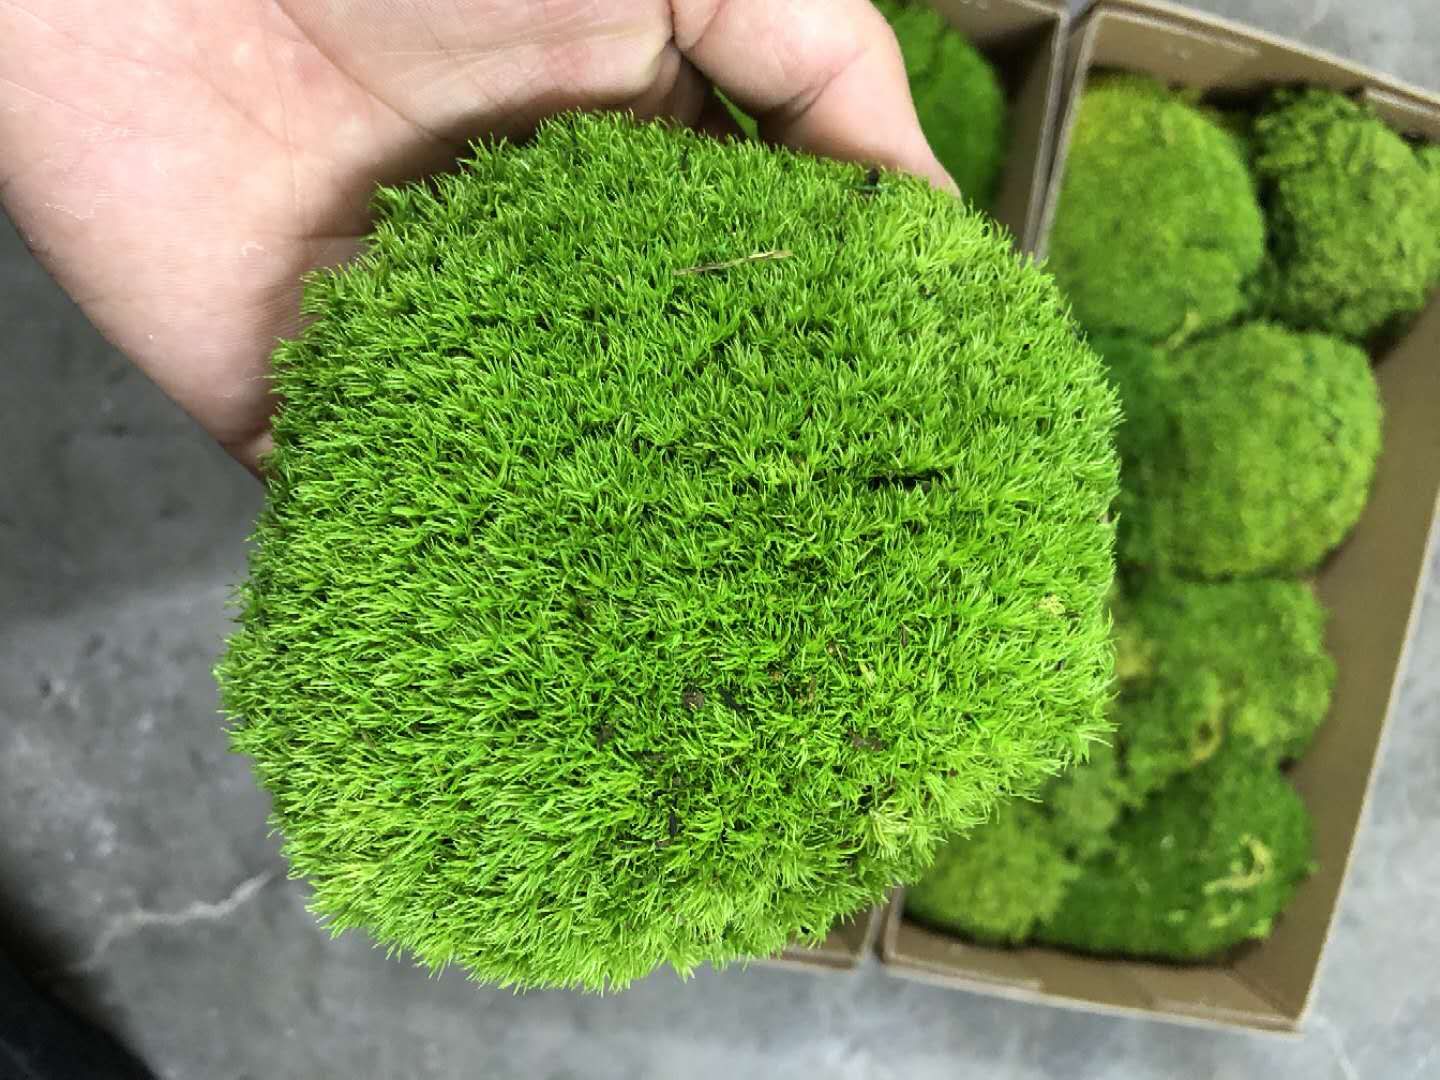 Bun moss in bulk for green walls